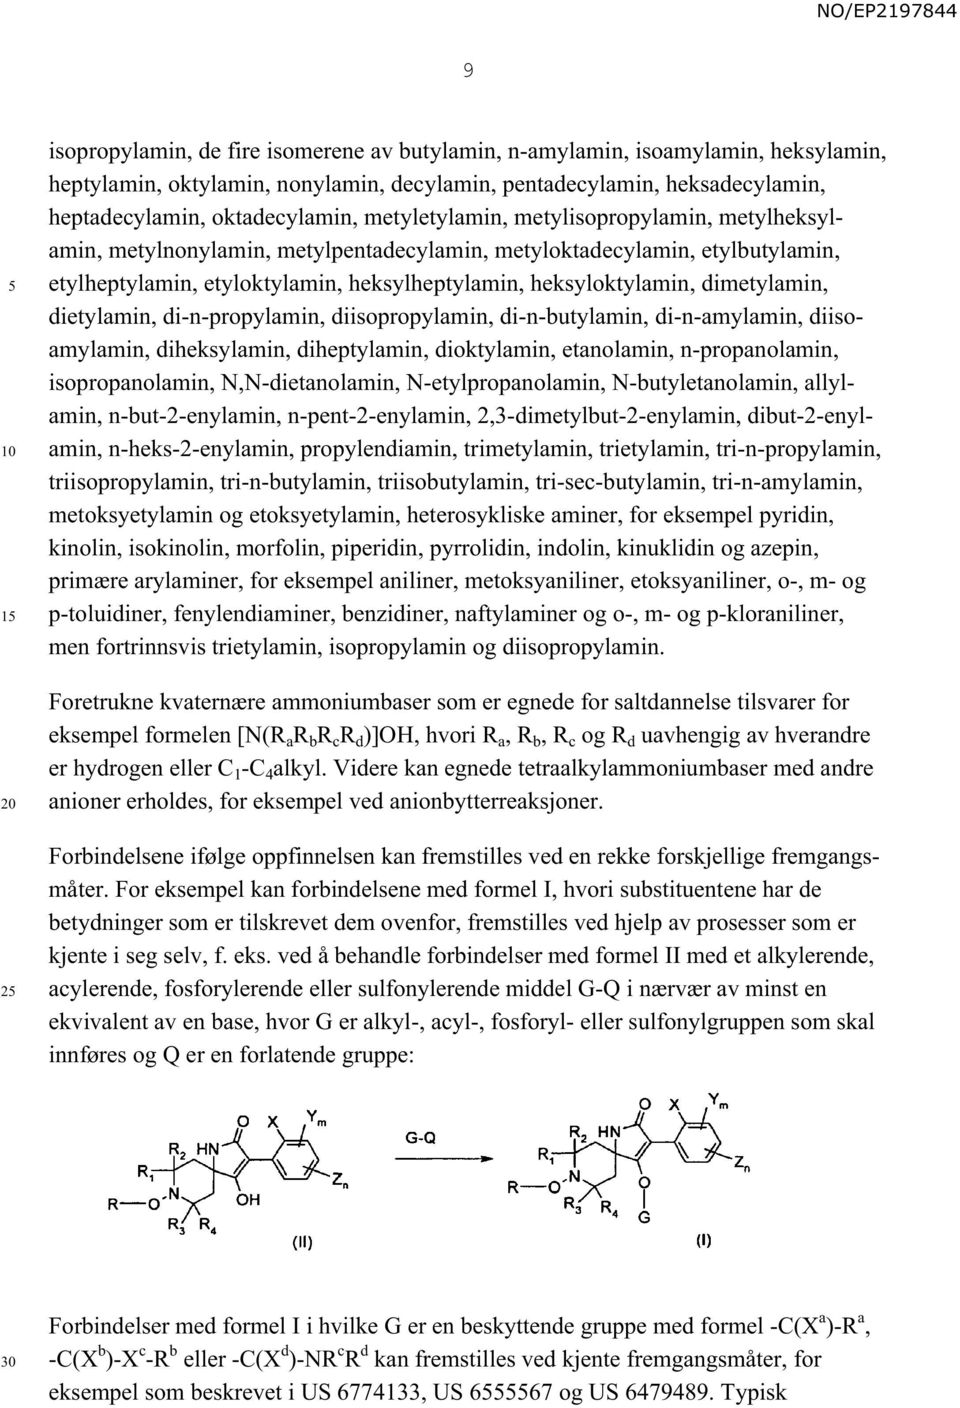 dimetylamin, dietylamin, di-n-propylamin, diisopropylamin, di-n-butylamin, di-n-amylamin, diisoamylamin, diheksylamin, diheptylamin, dioktylamin, etanolamin, n-propanolamin, isopropanolamin,